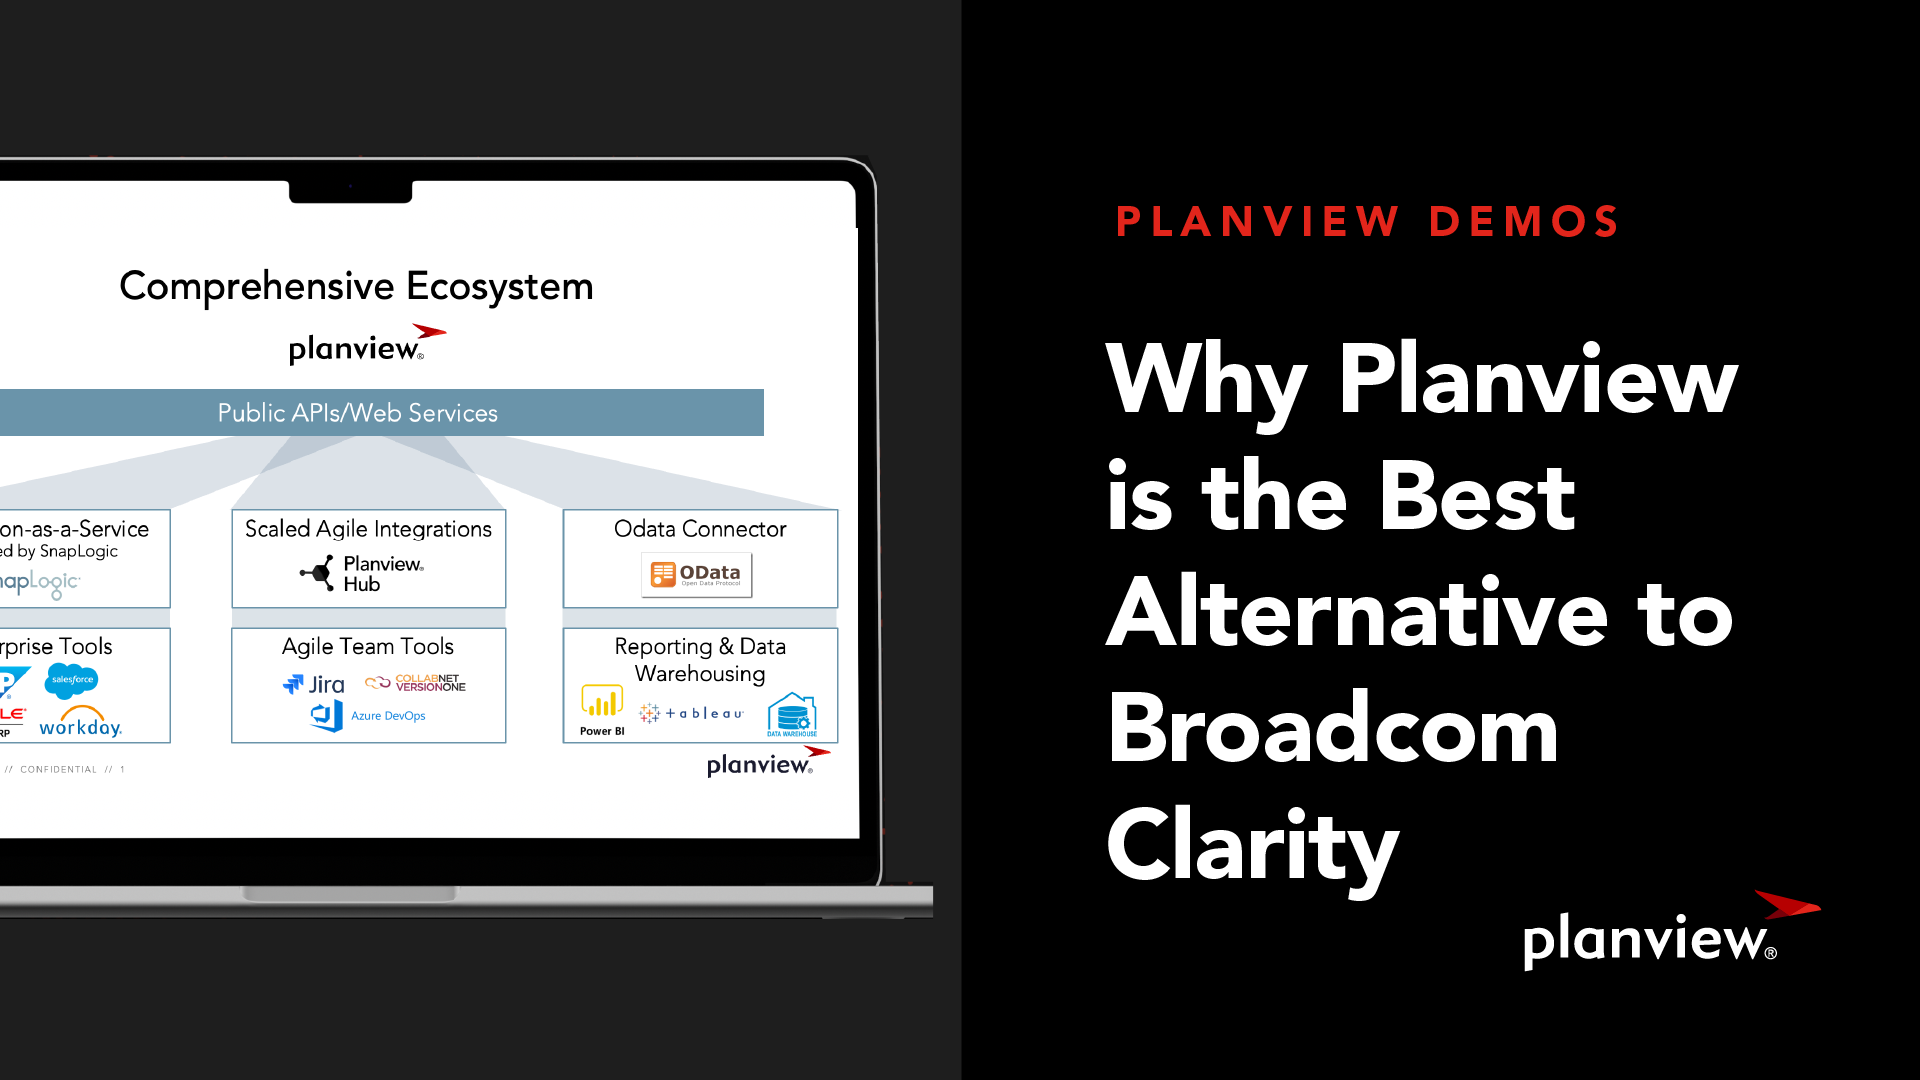 How Planview Beats Broadcom